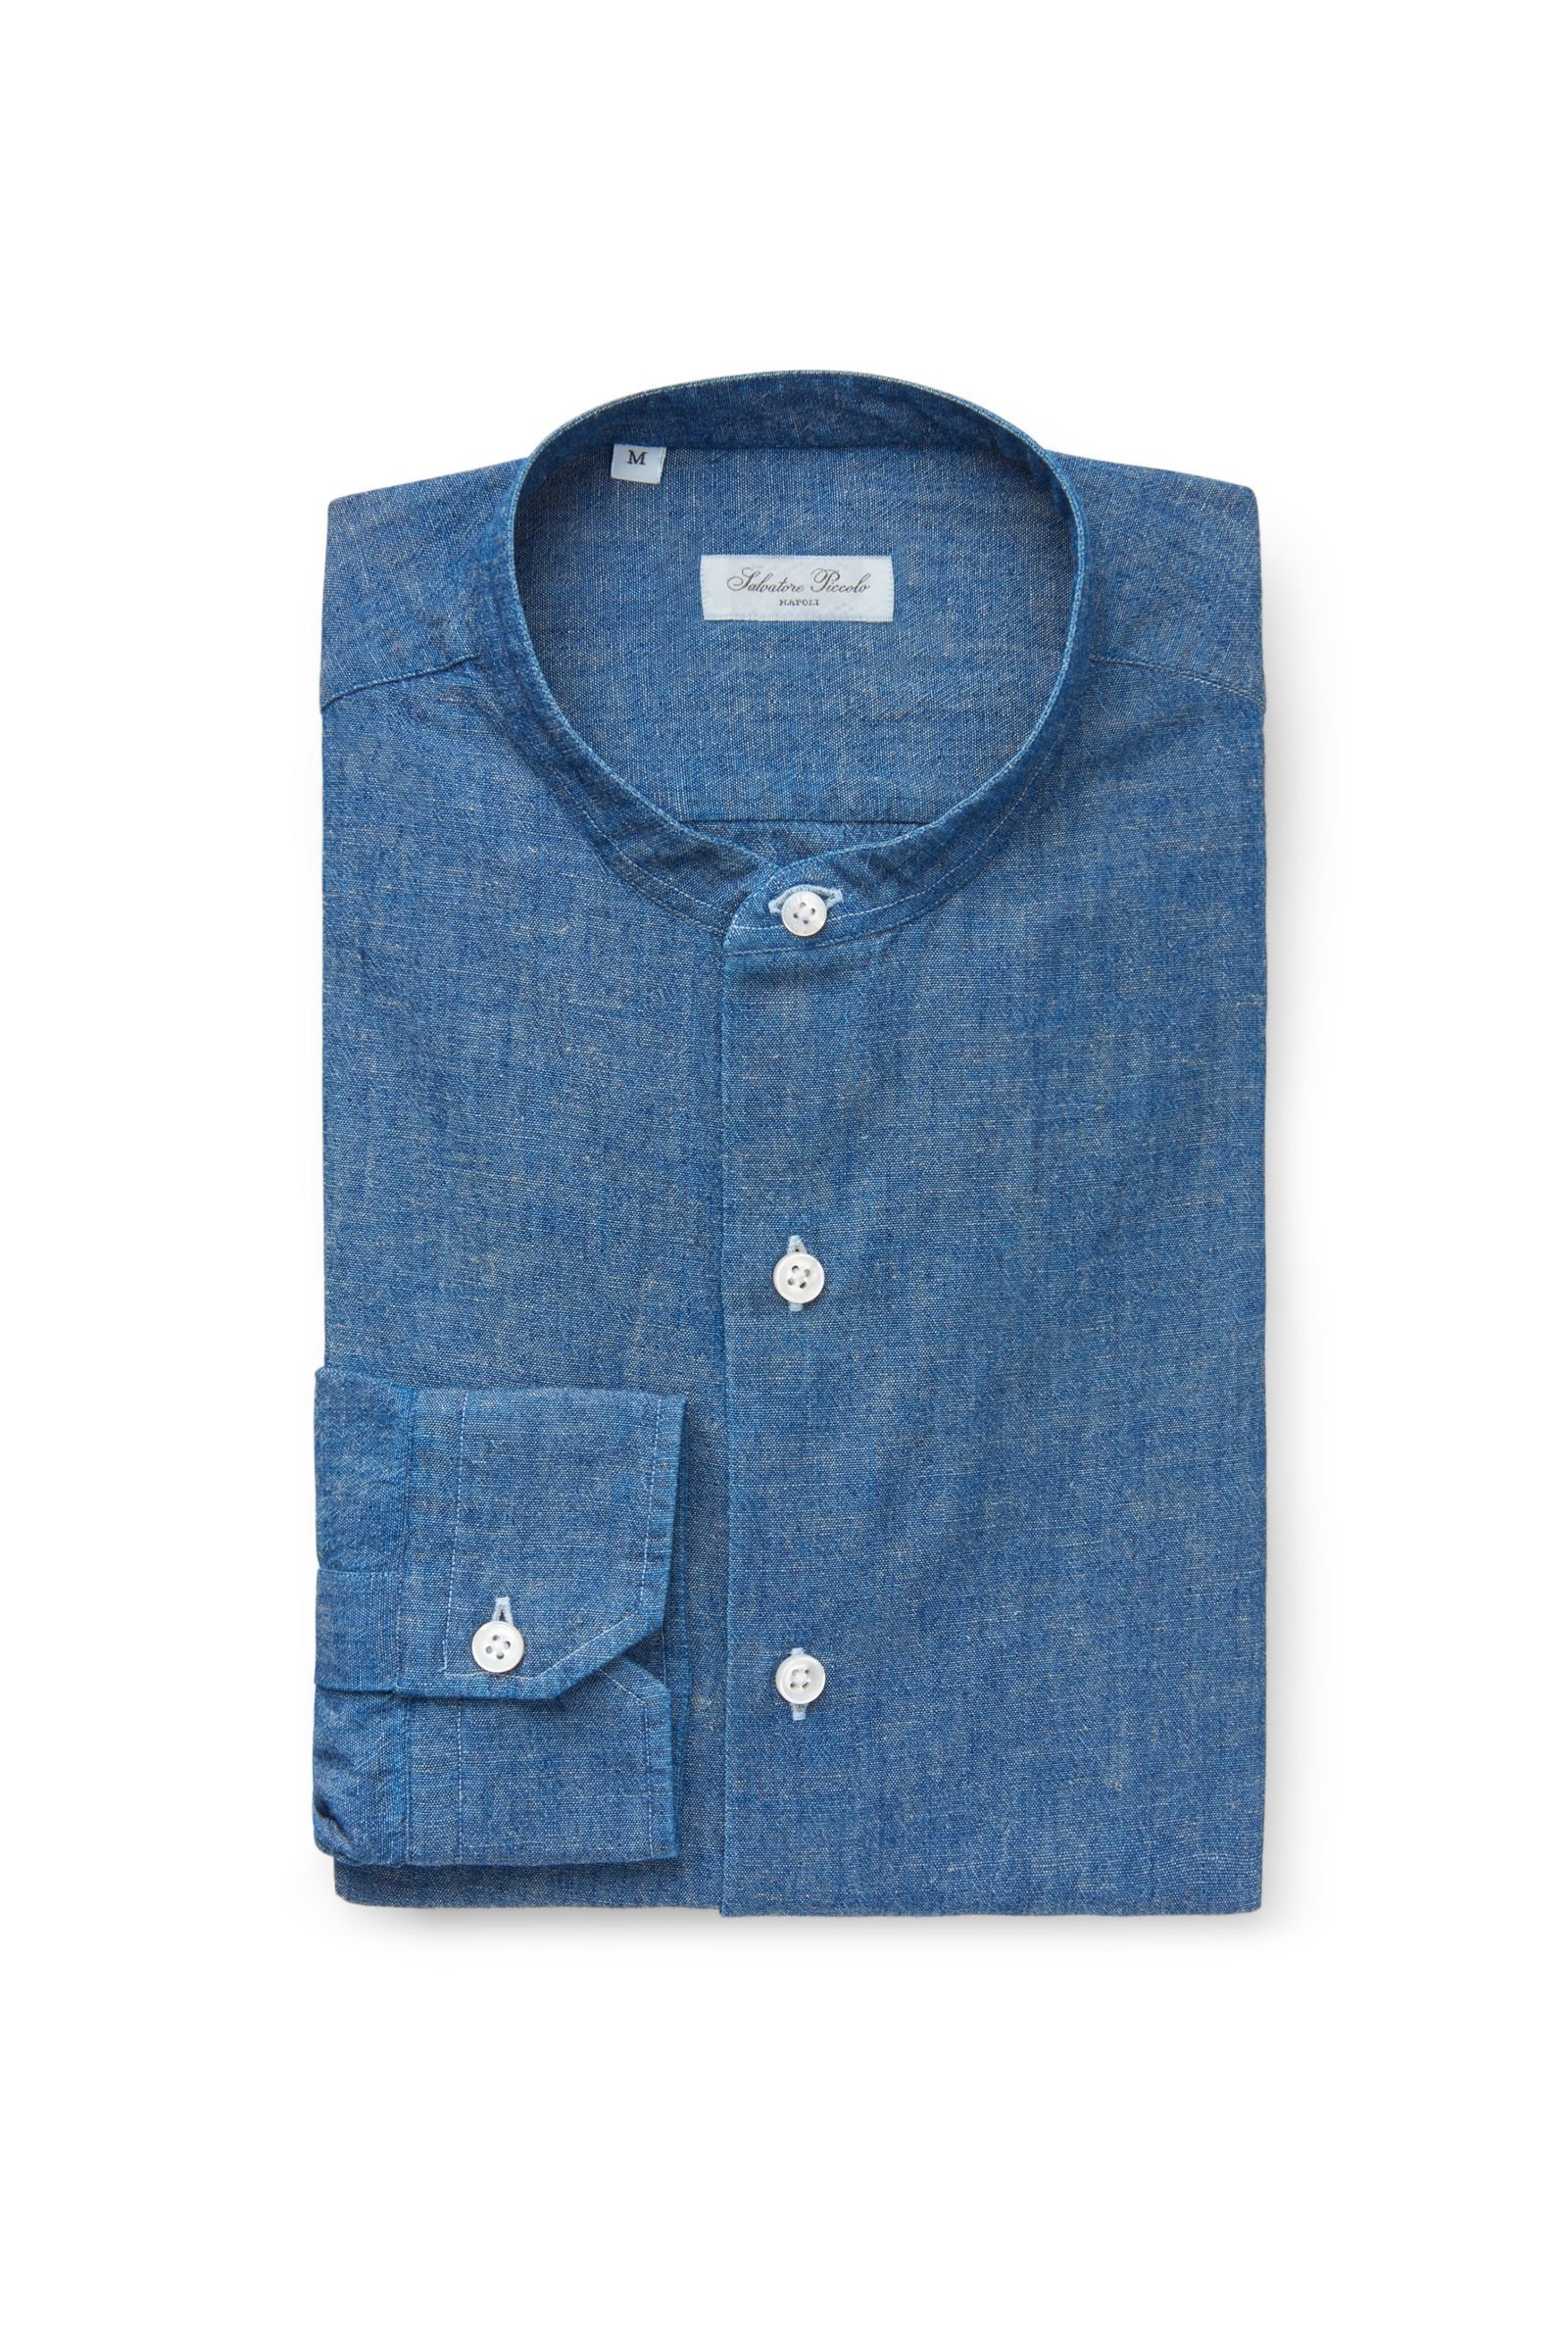 Chambray shirt 'Robert' Grandad collar blue